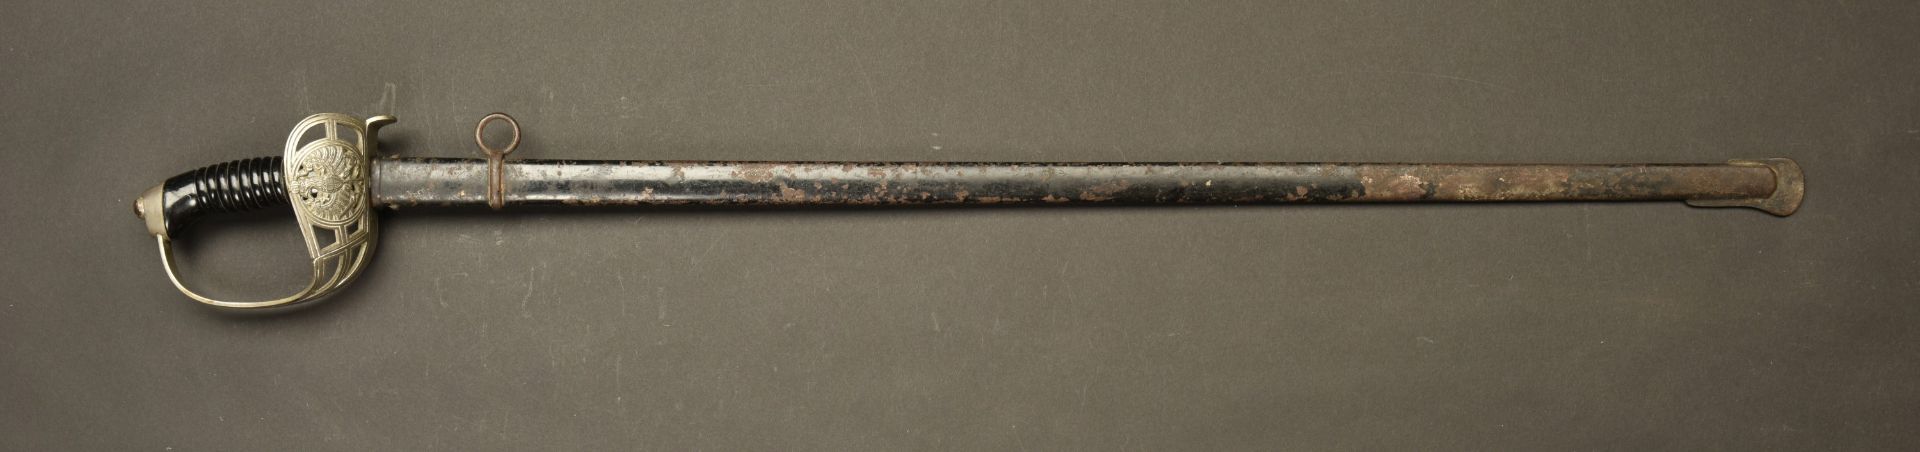 Sabre de cavalerie prussien 1889  d achat prive du HR13. German hussars private purchase sword. Husa